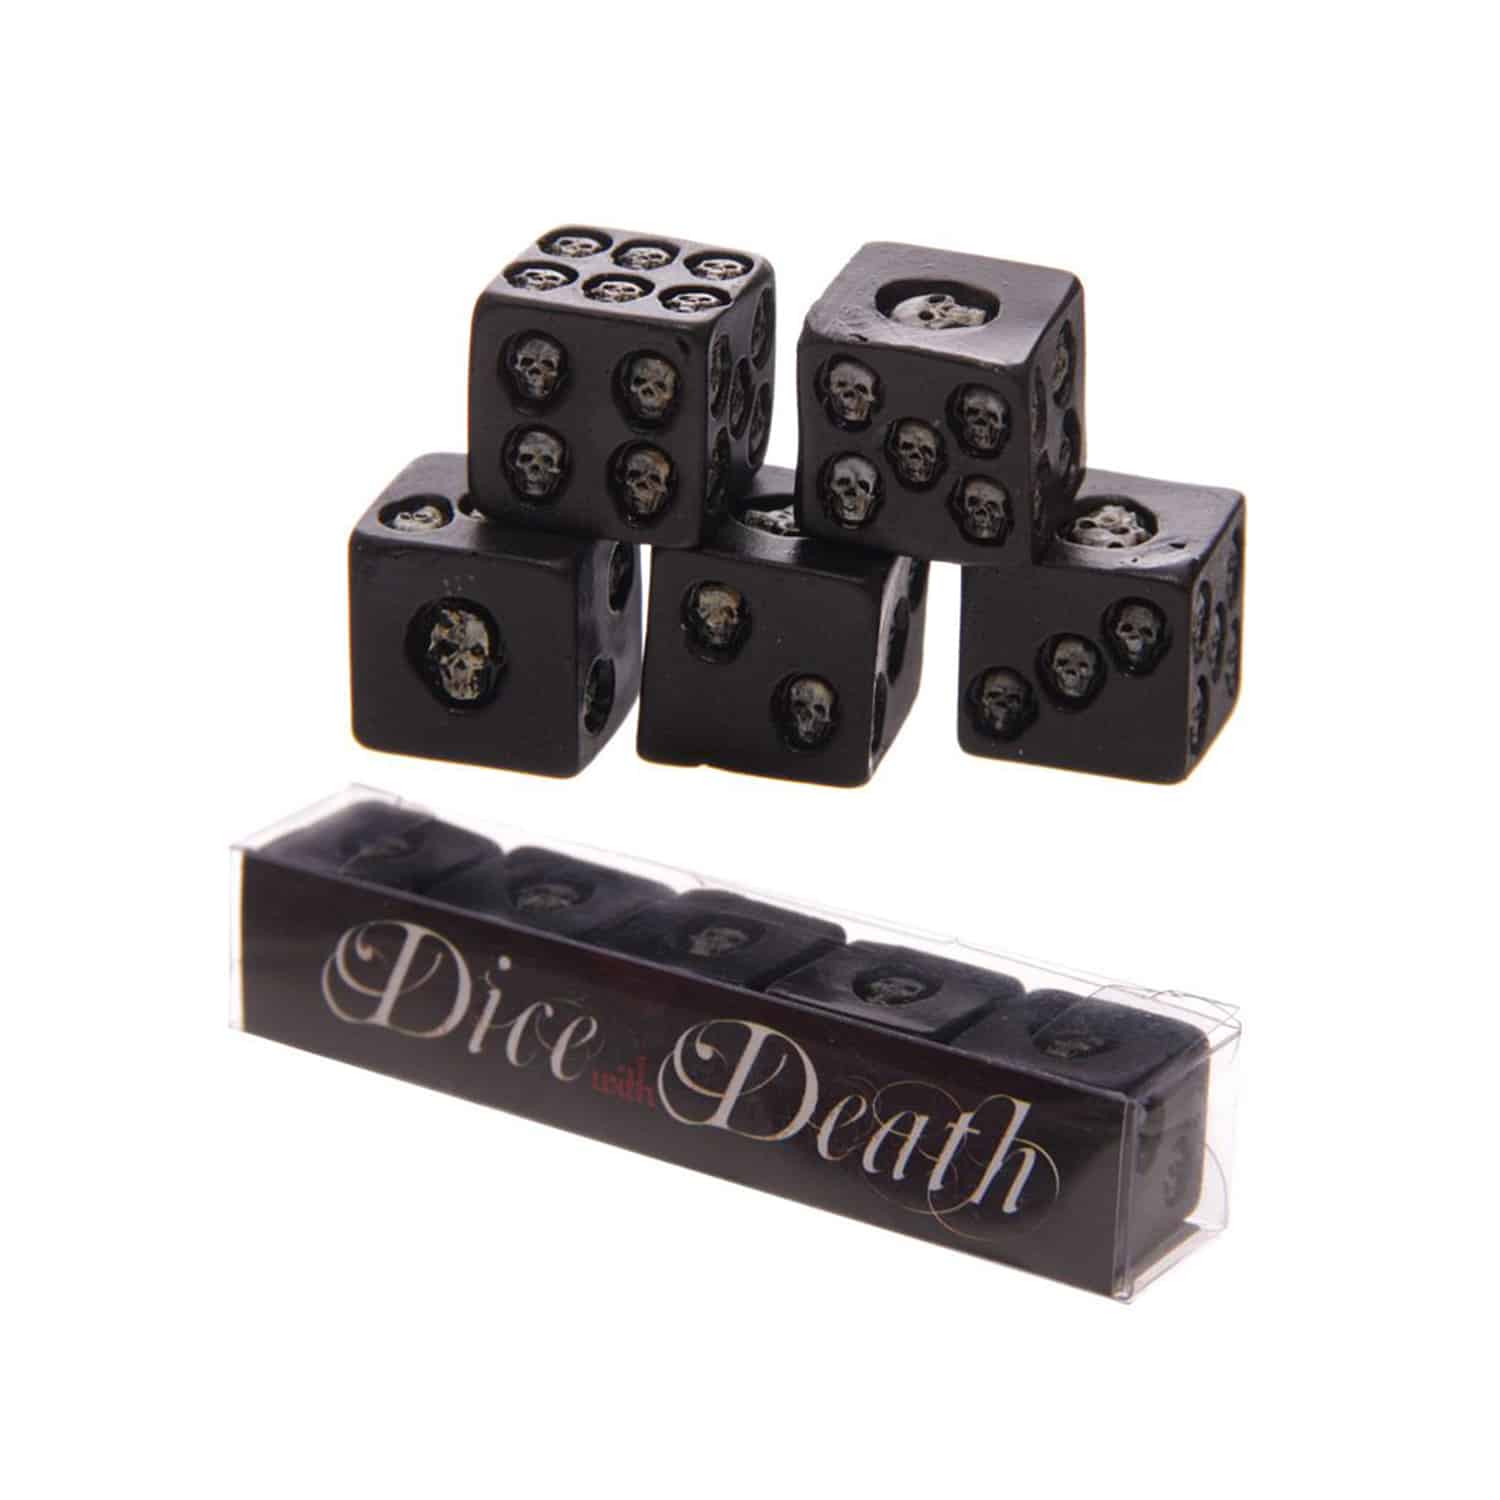 dice-with-death-set-of-5-black-skull-dice